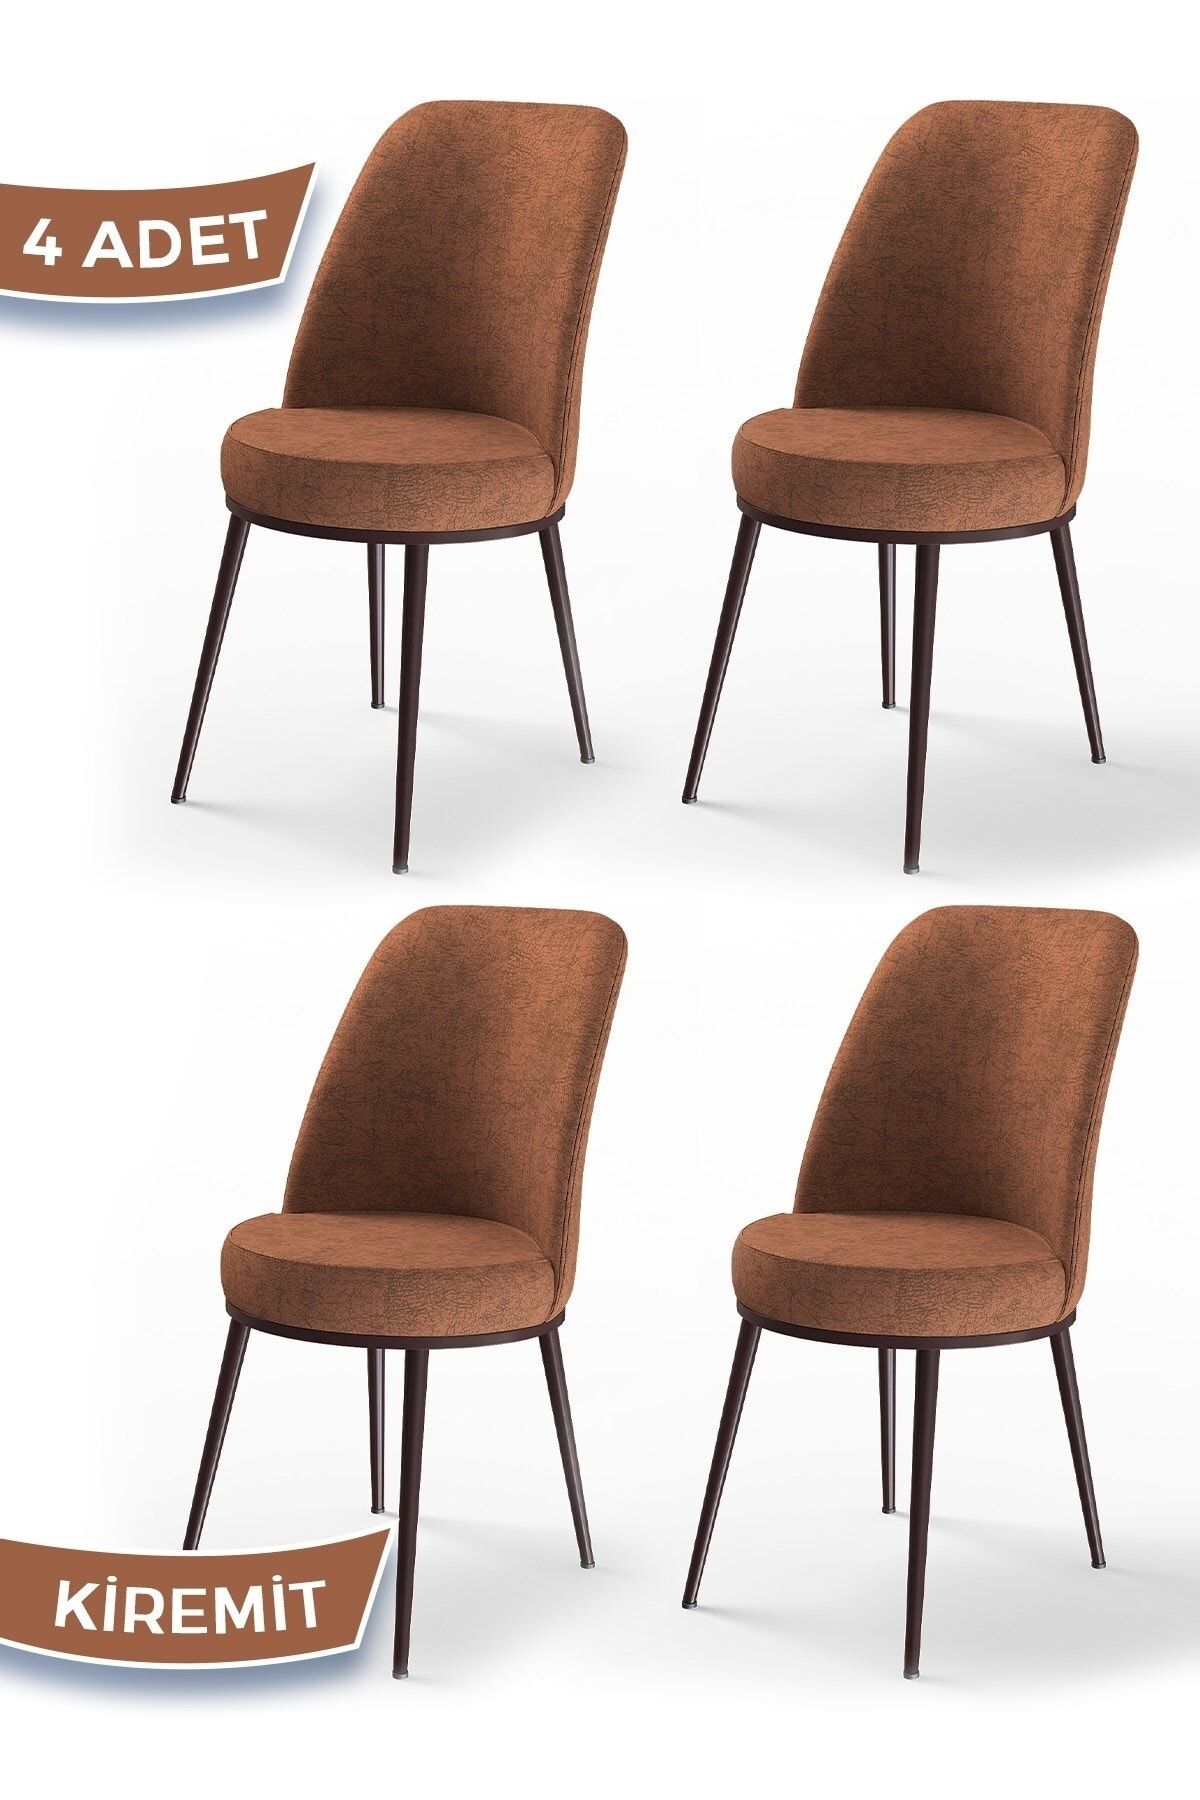 Canisa Concept Dexa Serisi, Üst Kalite Mutfak Sandalyesi, Metal Kahverengi Iskeletli, 4 Adet Kriemit Sandalye